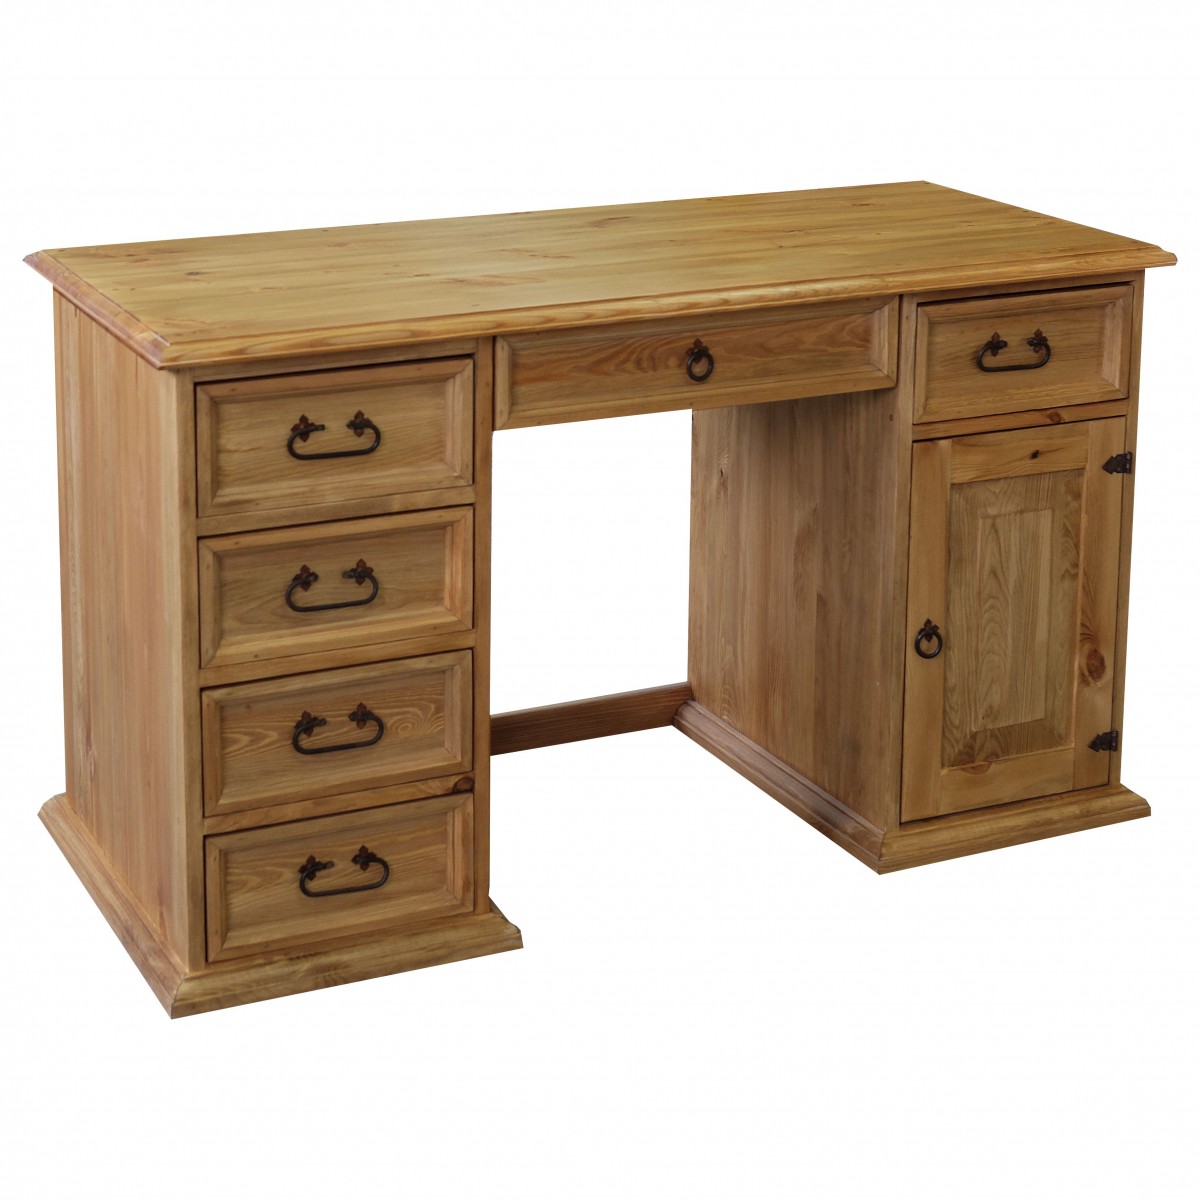 biurko z drewna